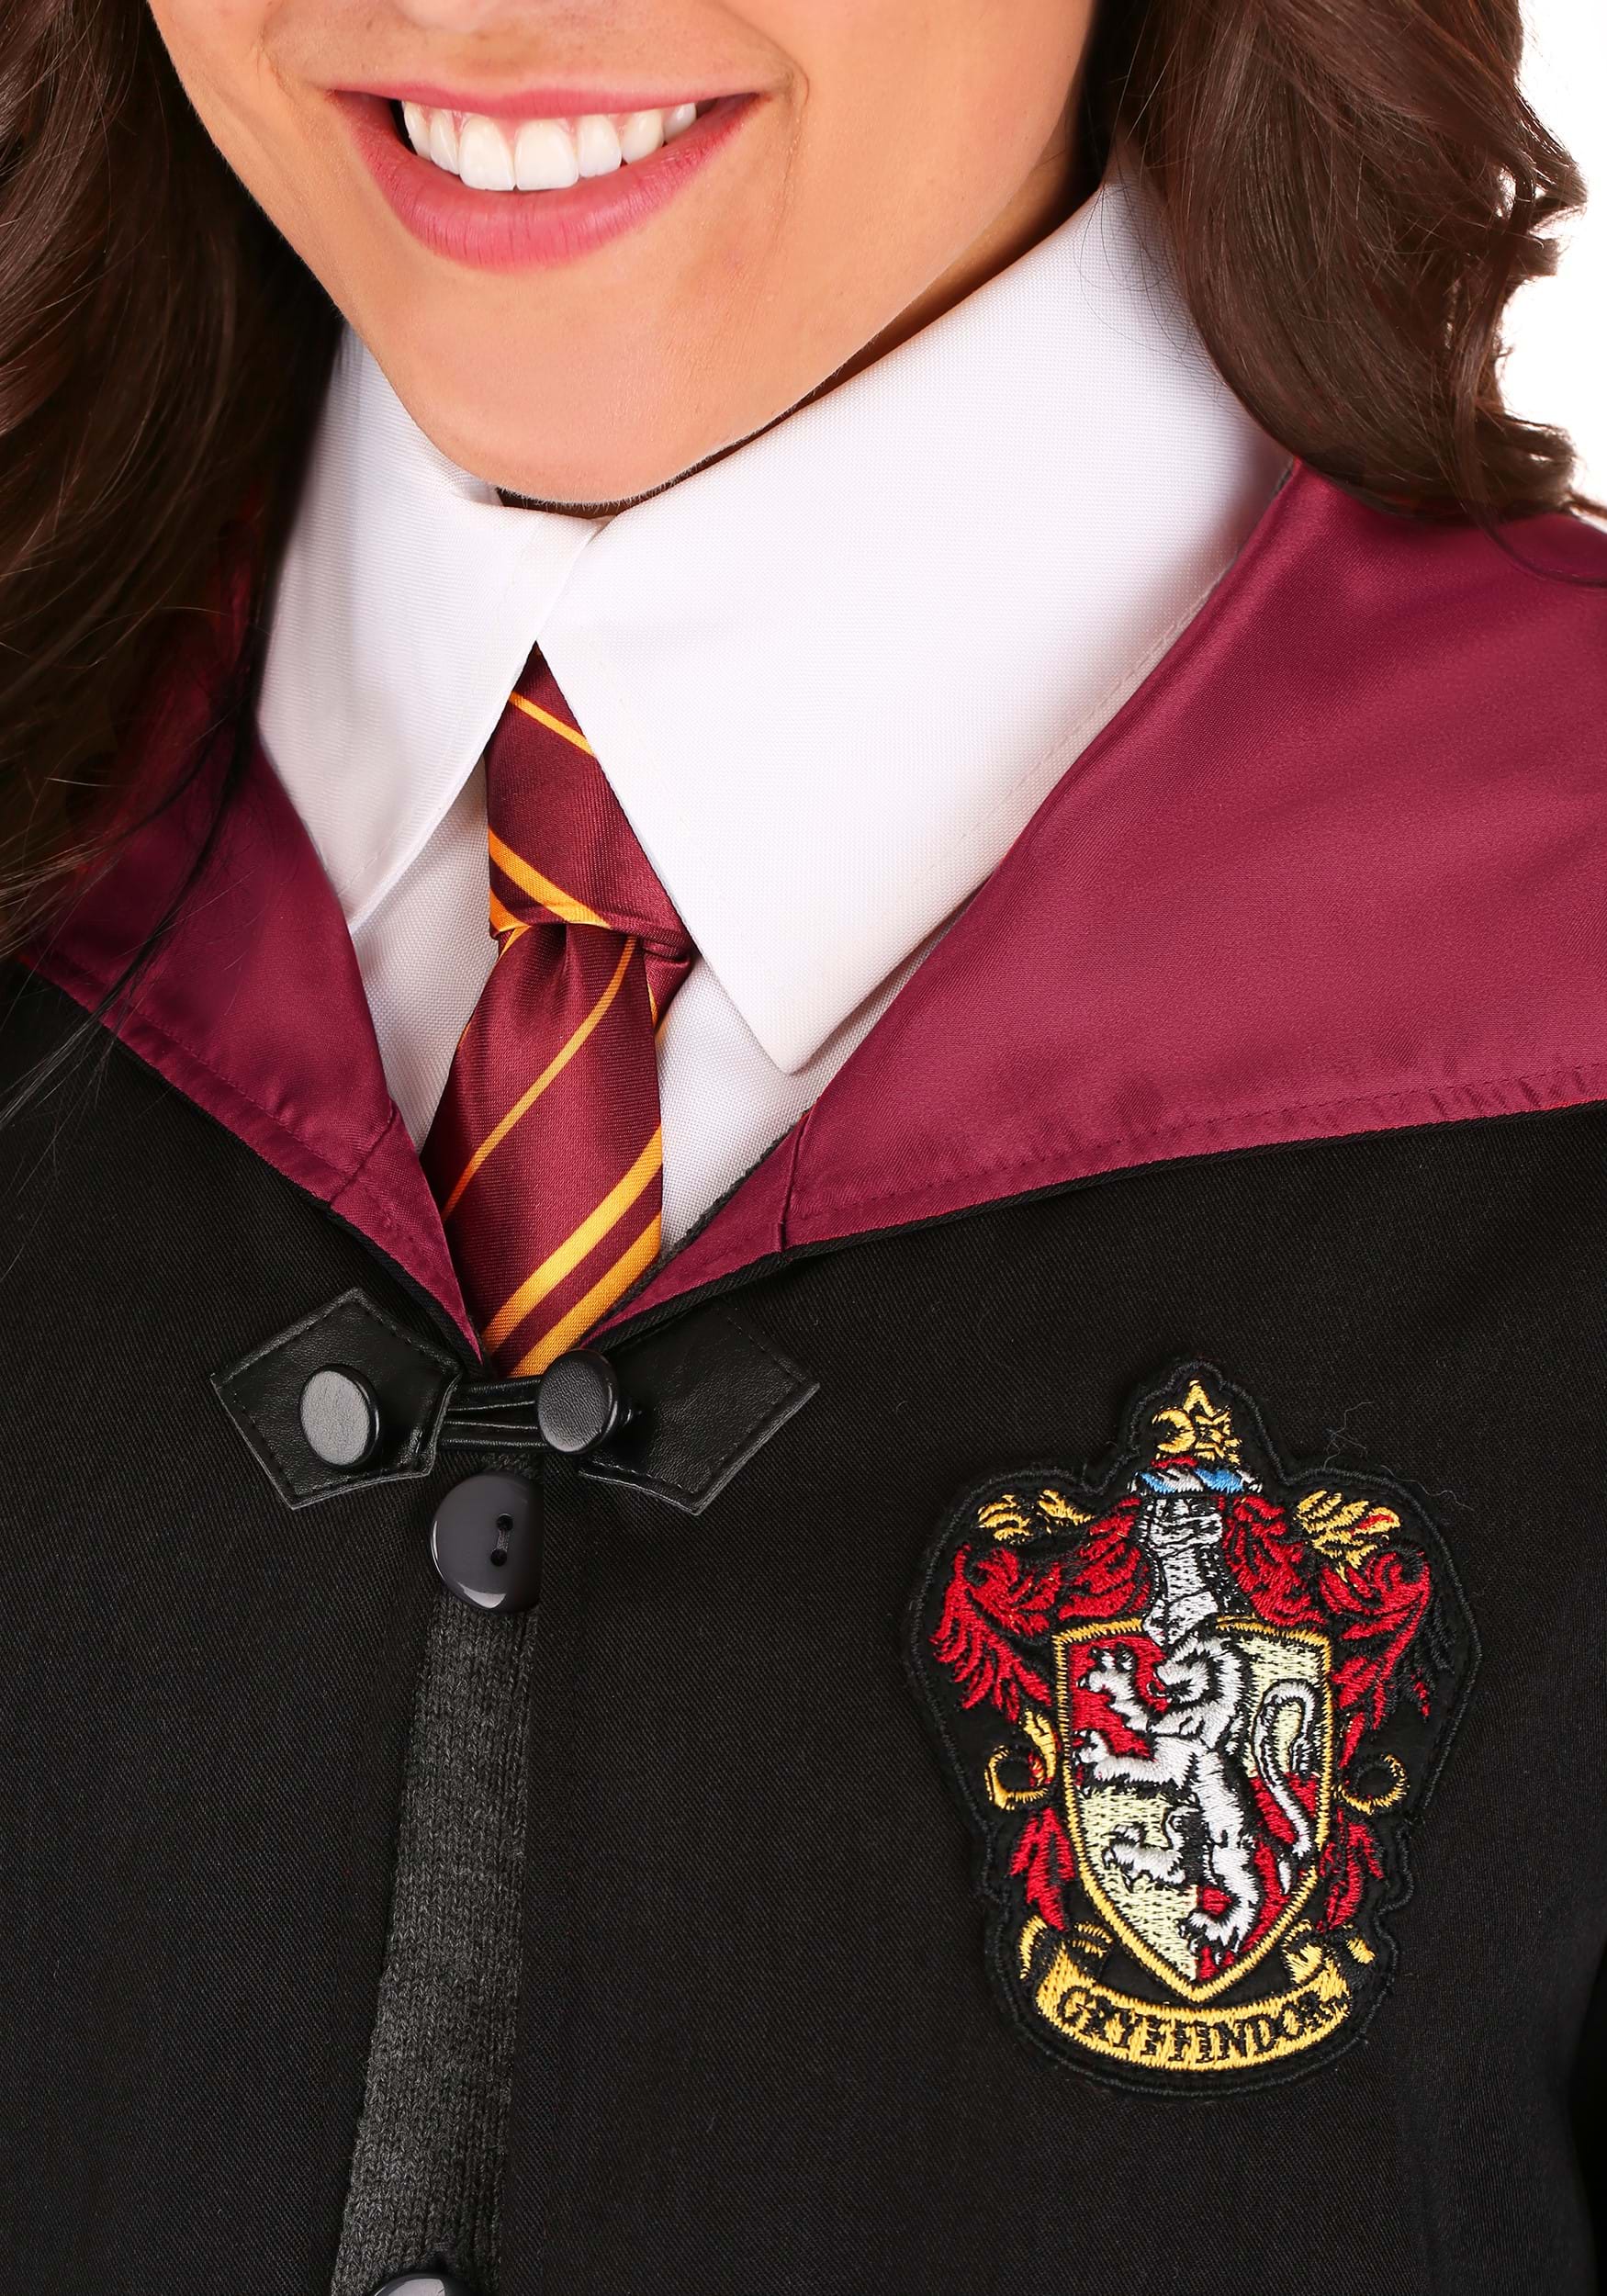 Women's Deluxe Harry Potter Hermione Costume